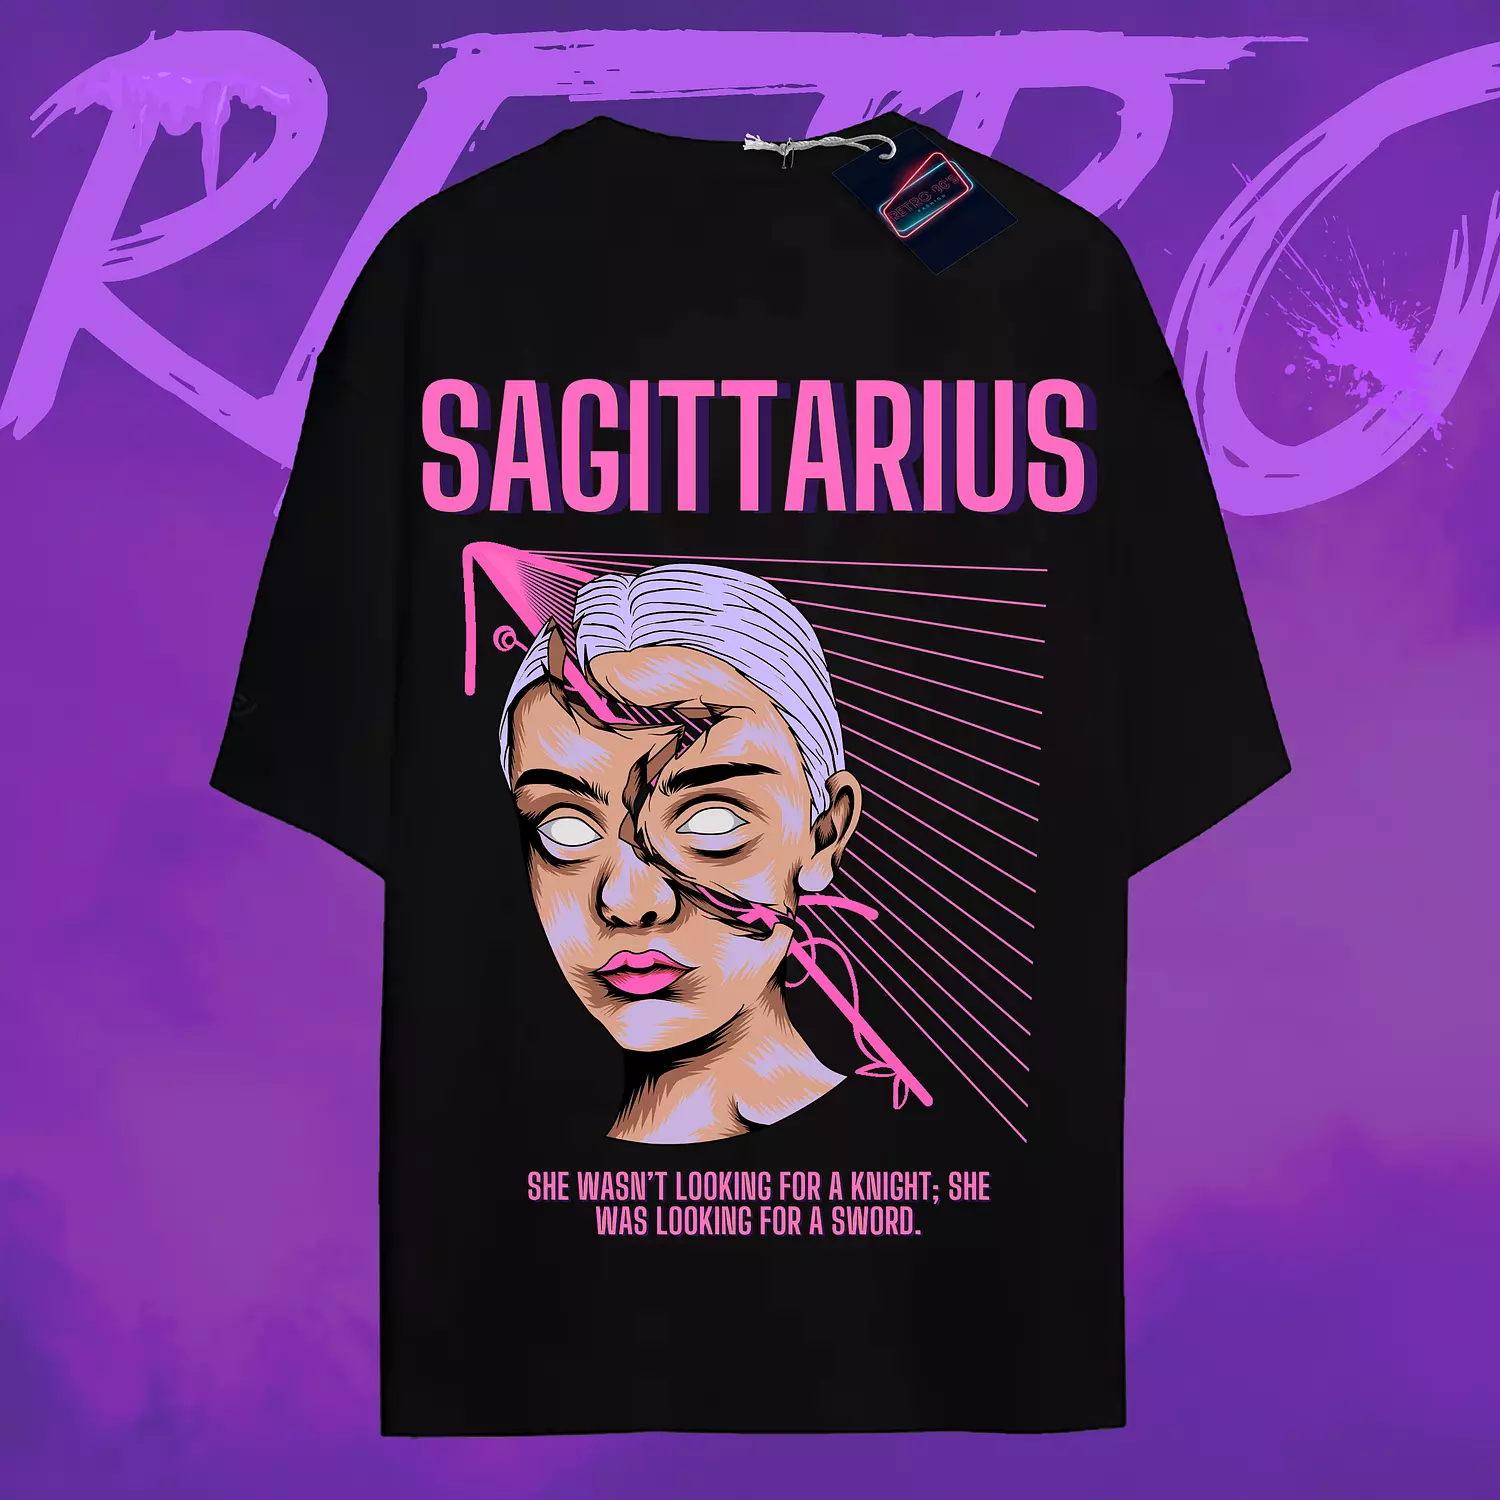 Sagittarius T-shirt  hover image